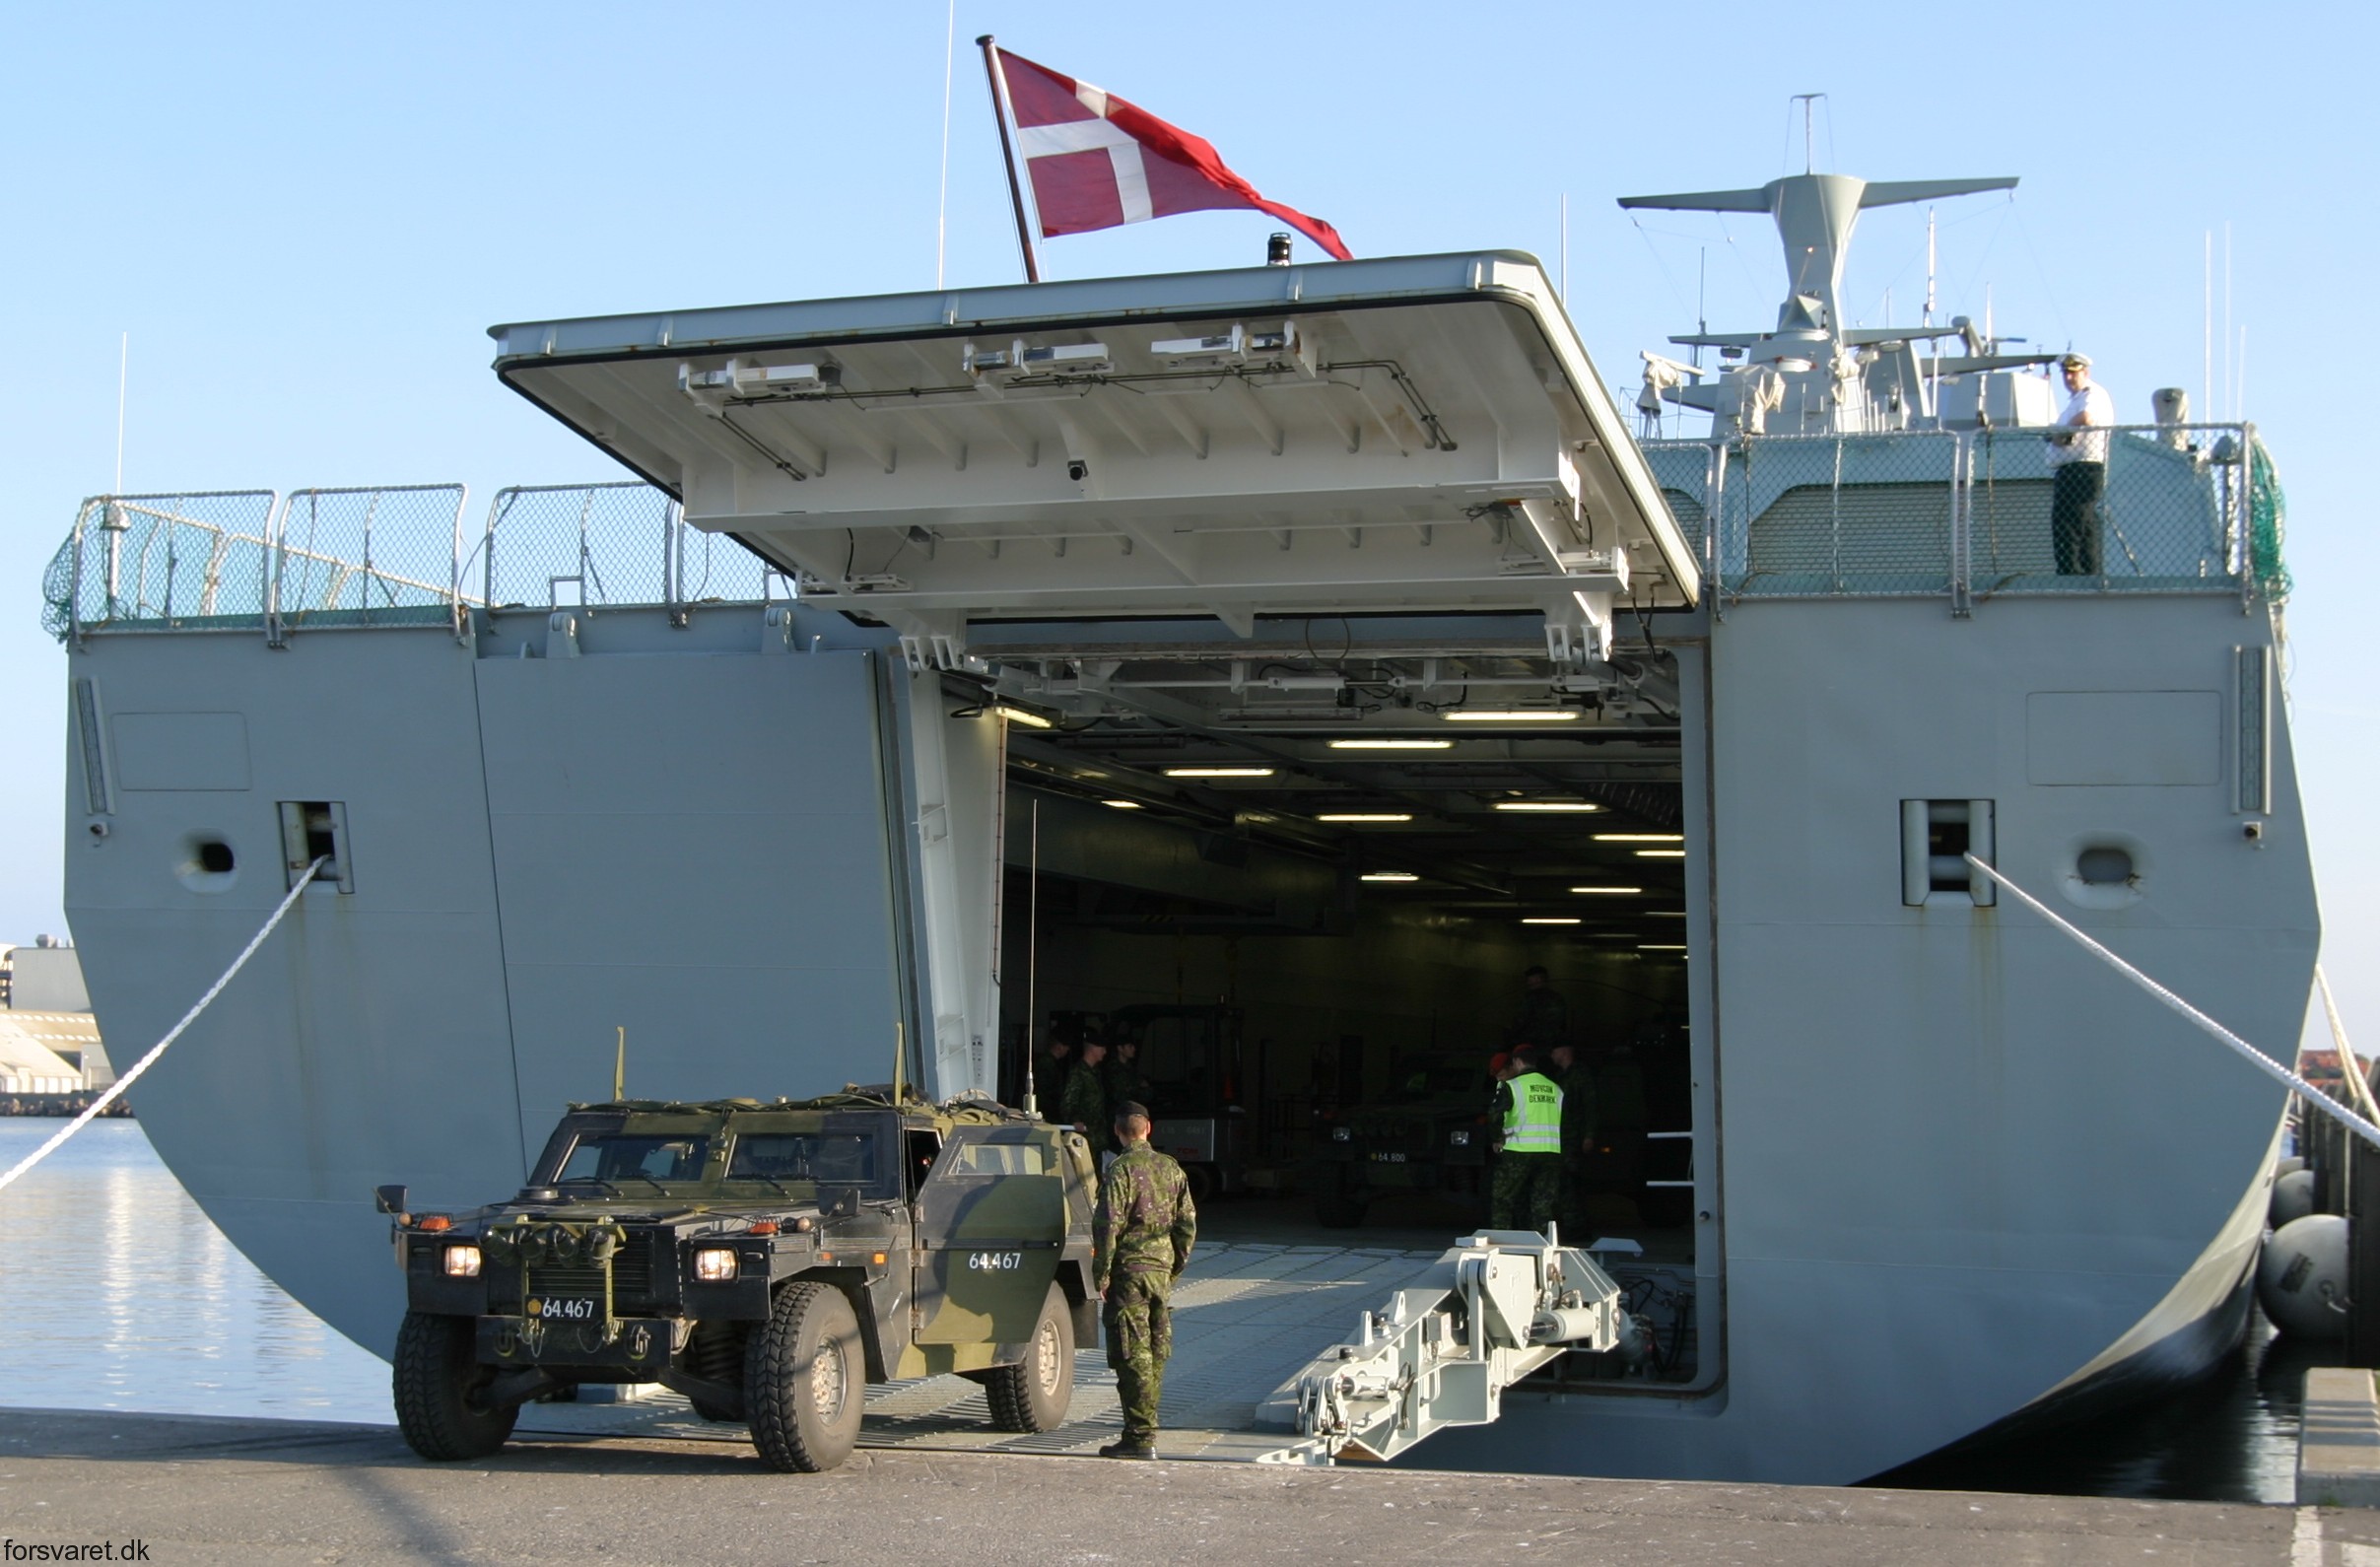 l-16 hdms absalon command support ship frigate royal danish navy 79 stern ramp amphibious